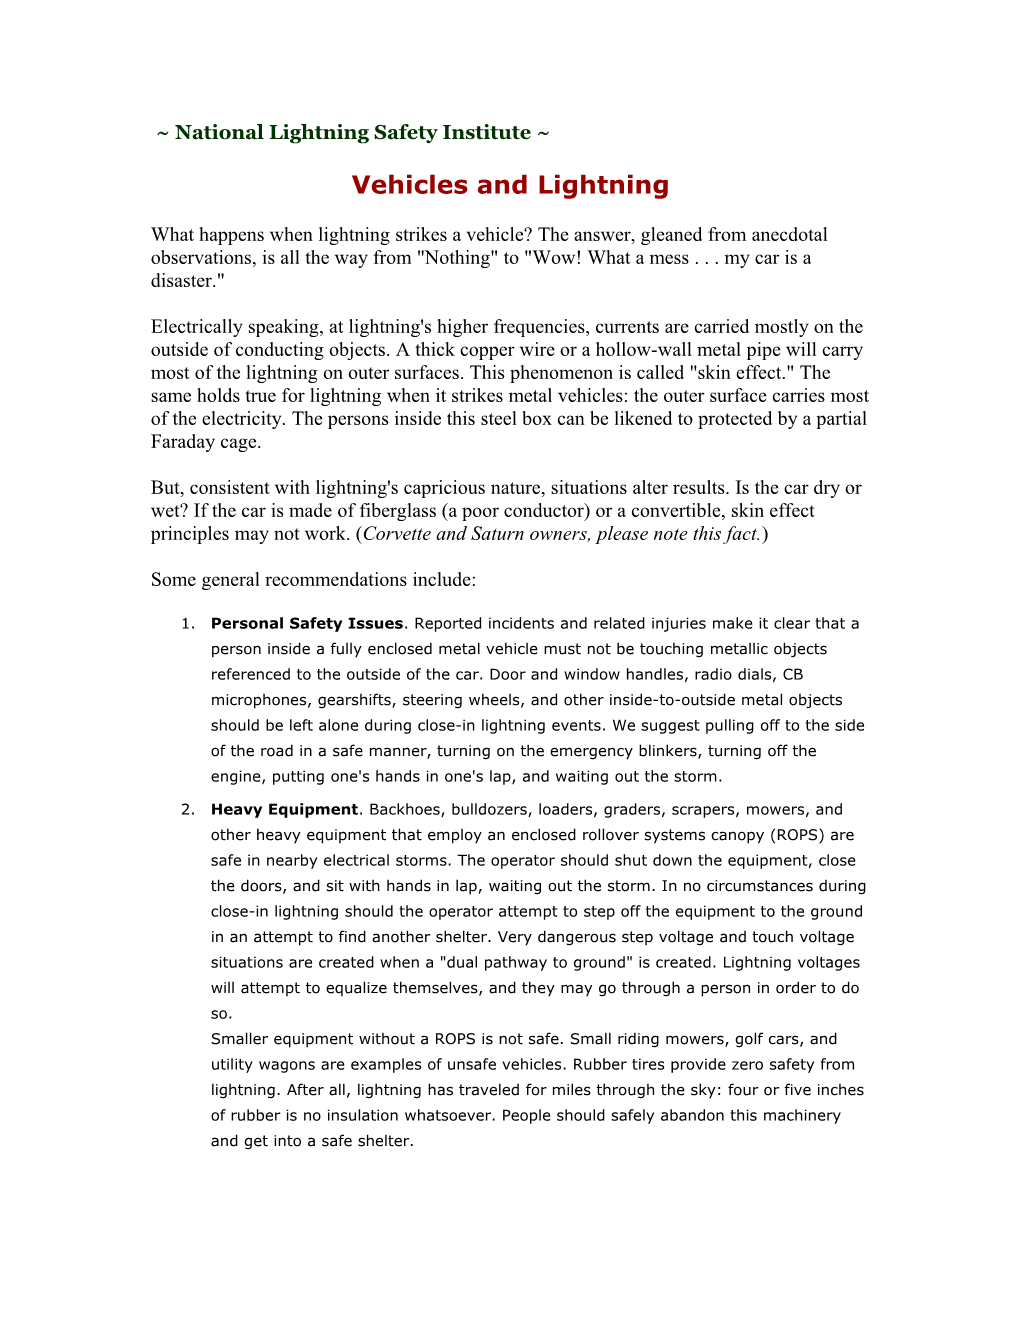 National Lightning Safety Institute